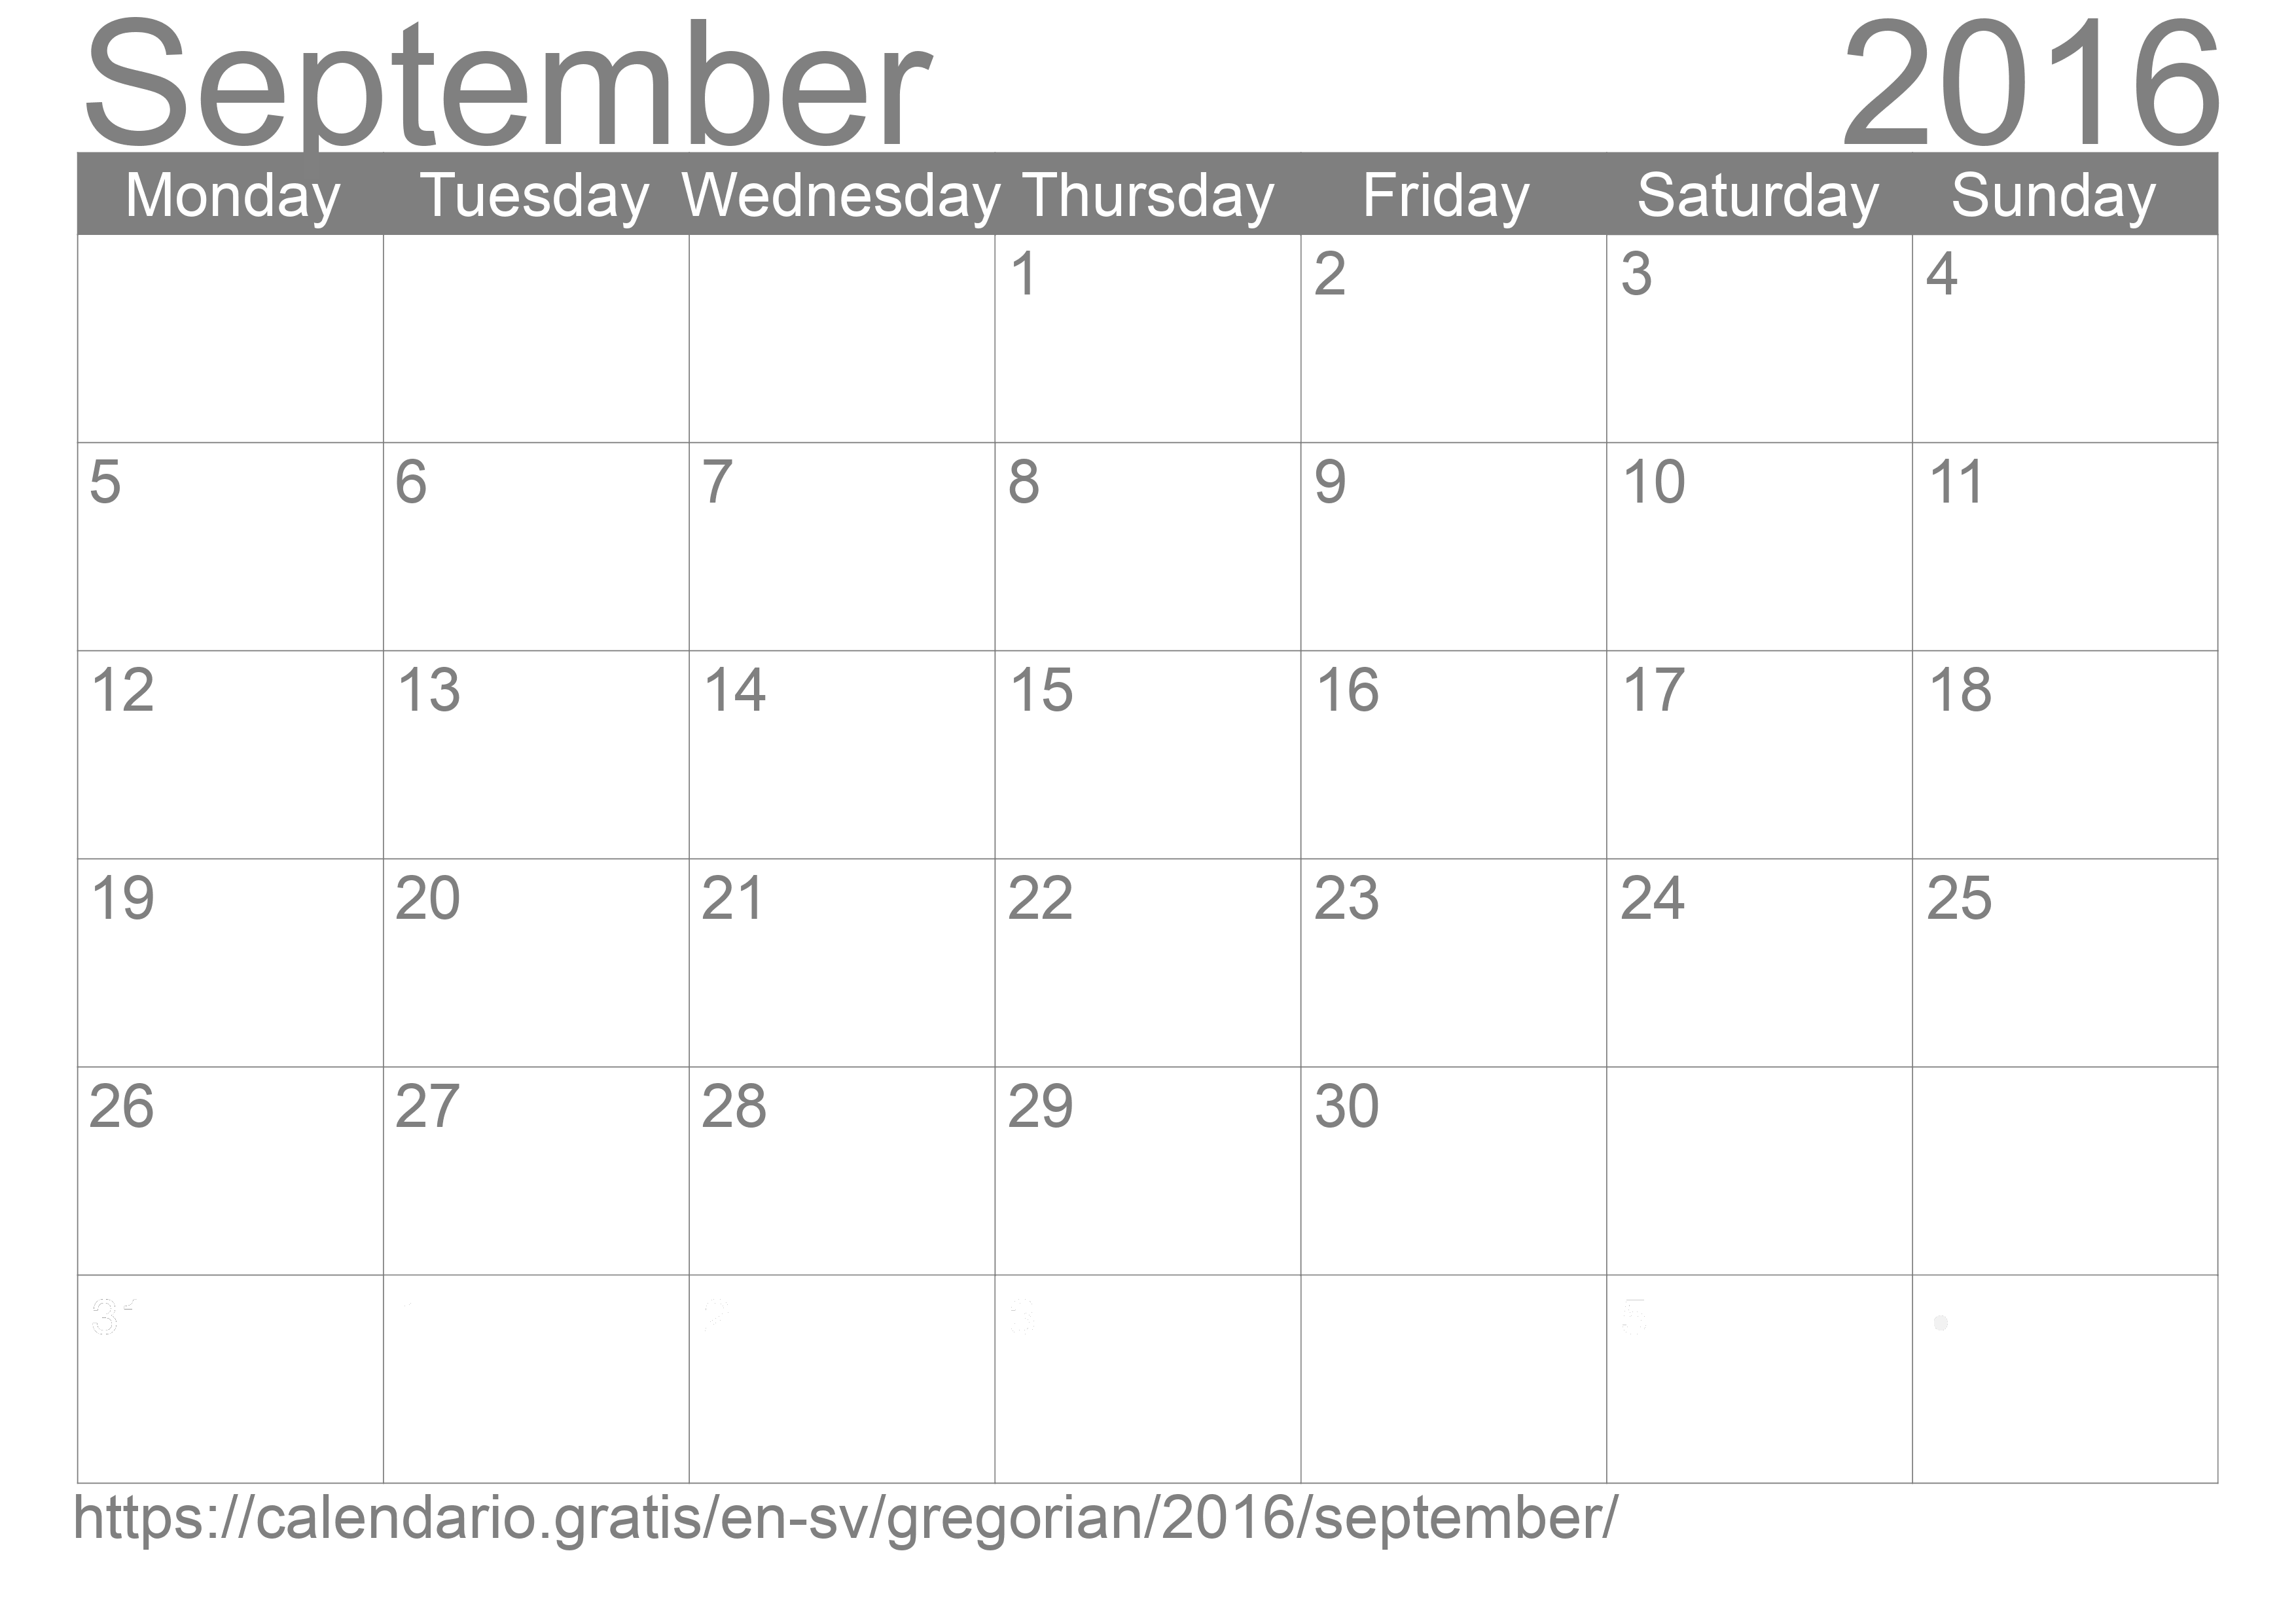 Calendar September 2016 to print